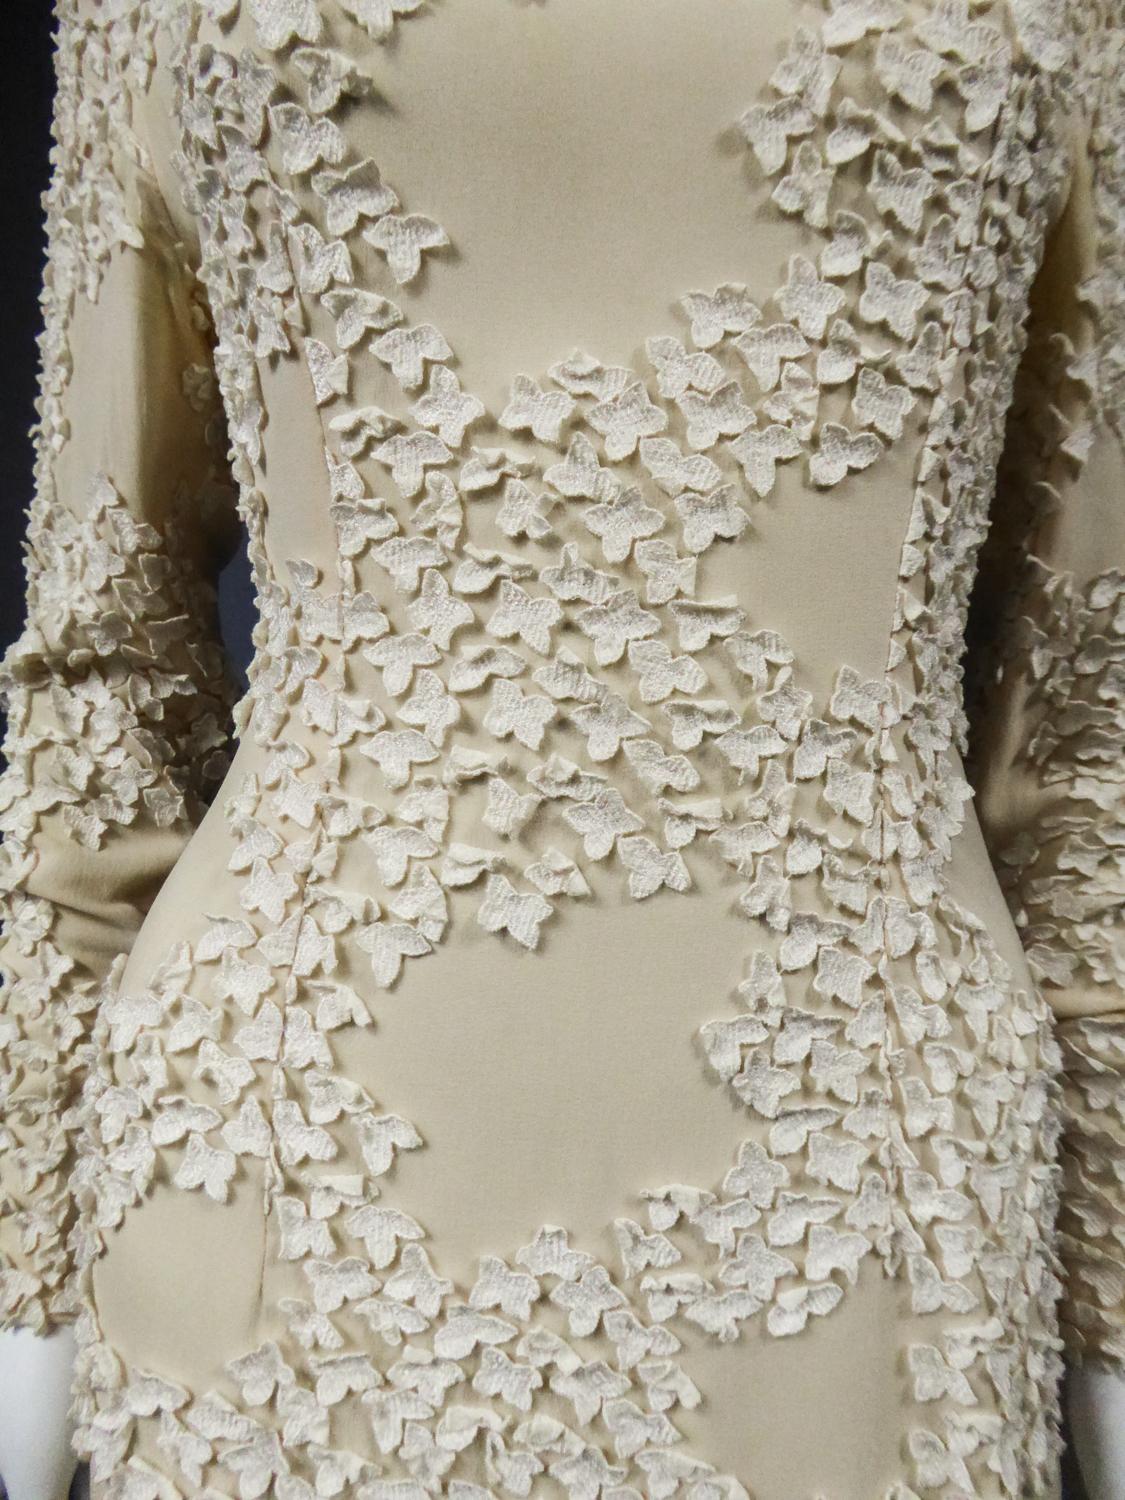 Beige A Jean Patou Couture Mini Dress by Christian Lacroix Show 1986 For Sale